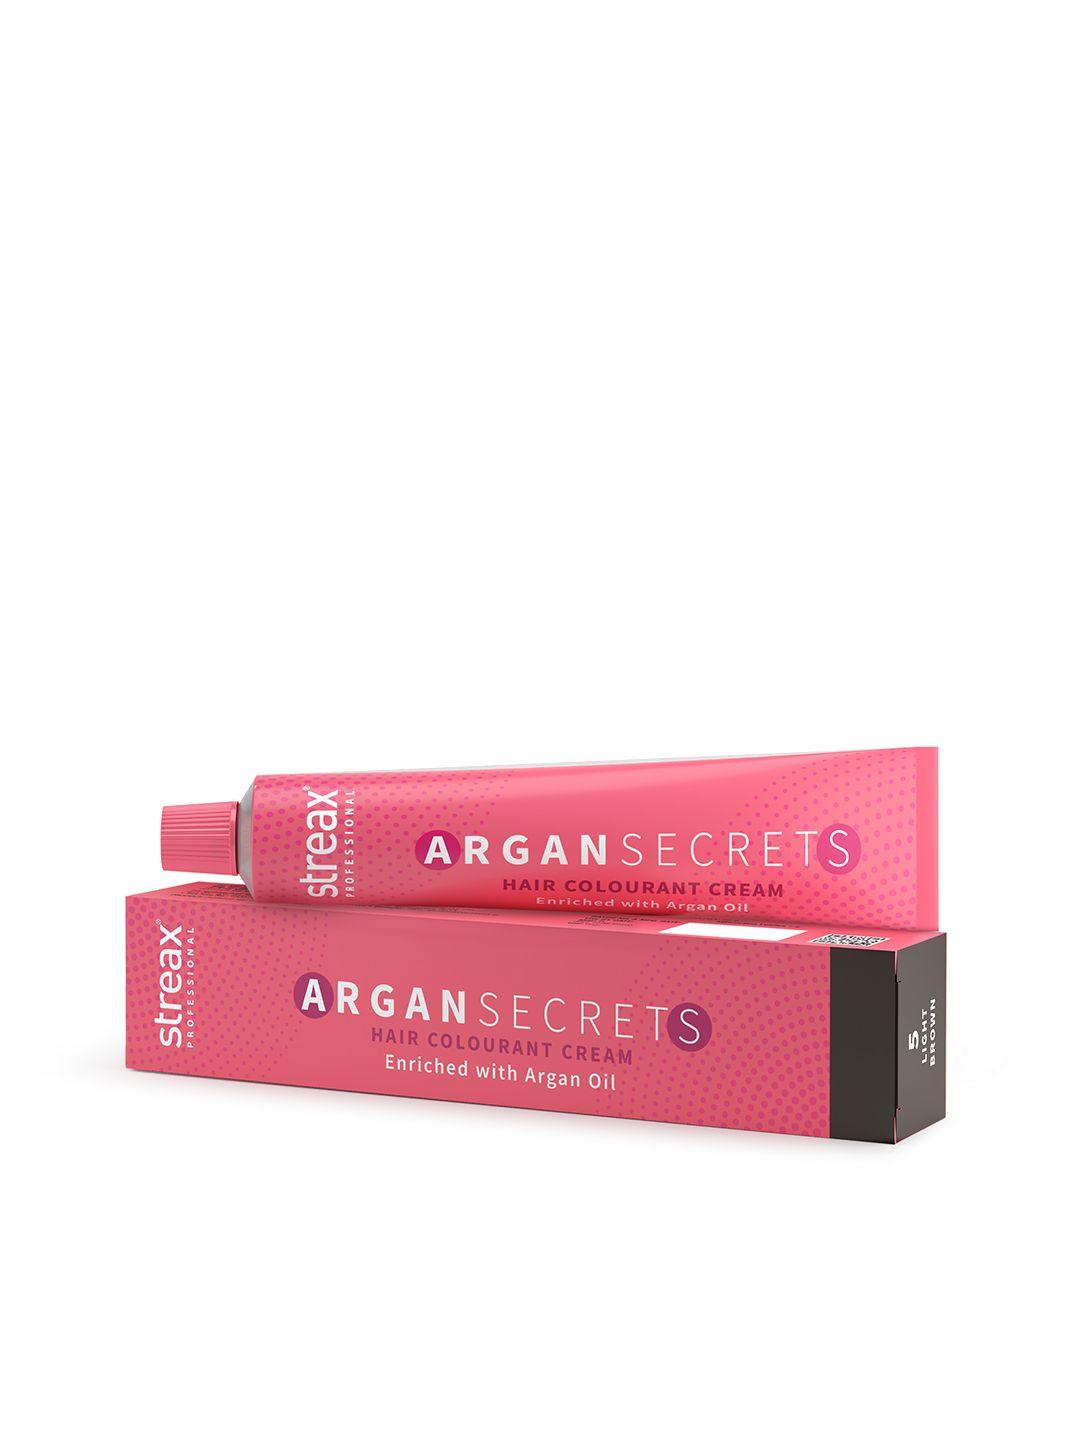 streax professional argan secrets hair colourant cream with argan oil 60g - light brown 5